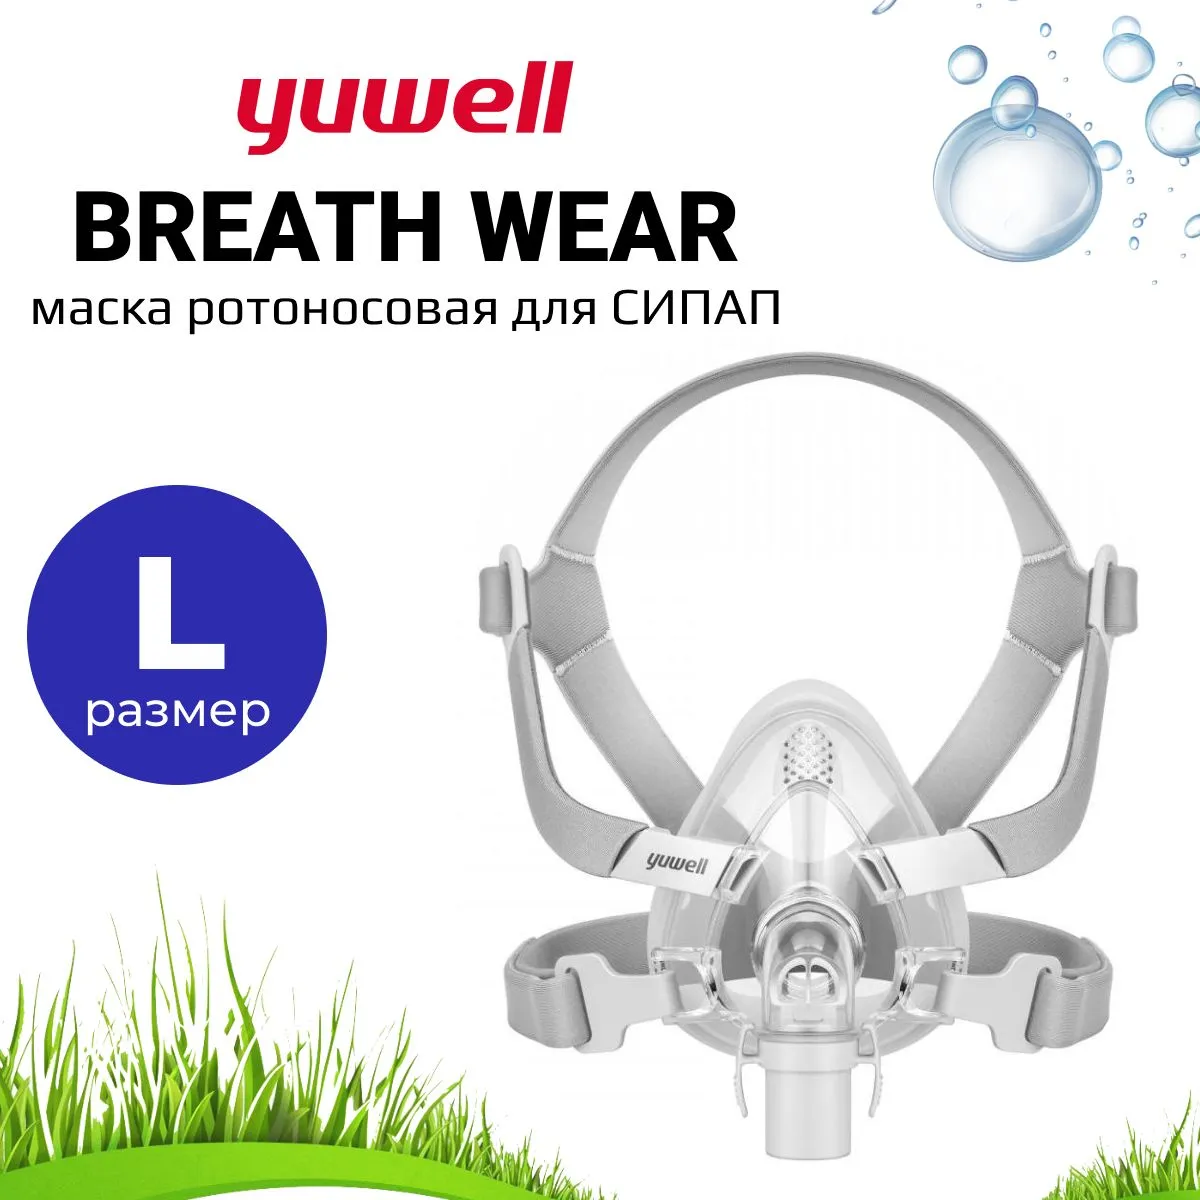 Ротоносовая Маска Yuwell BreathWear Series YF-02 (Размер L) для СИПАП